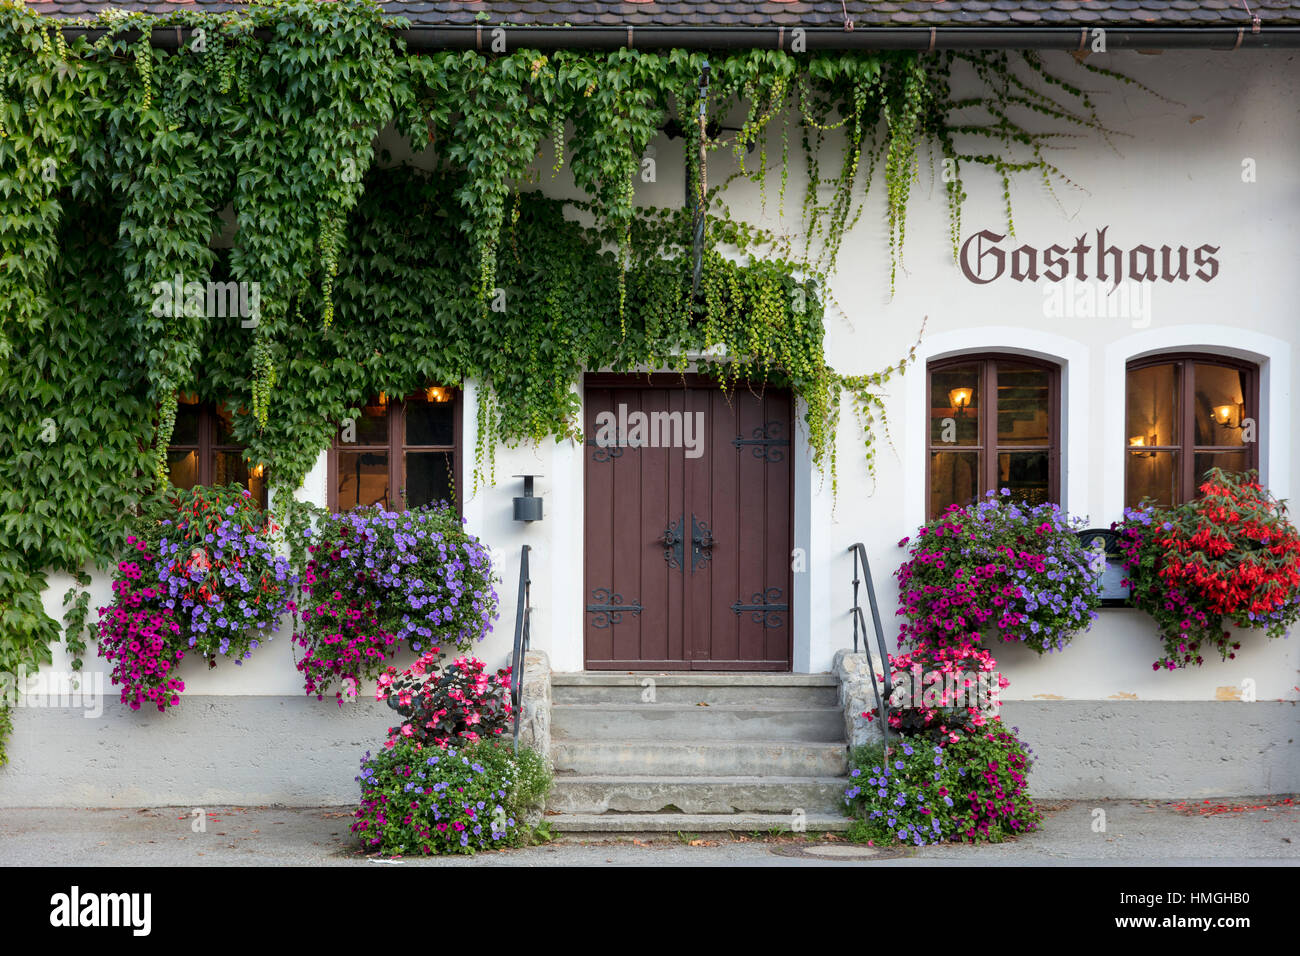 Ingresso anteriore per Gasthaus, Schwangau, Germania Foto Stock